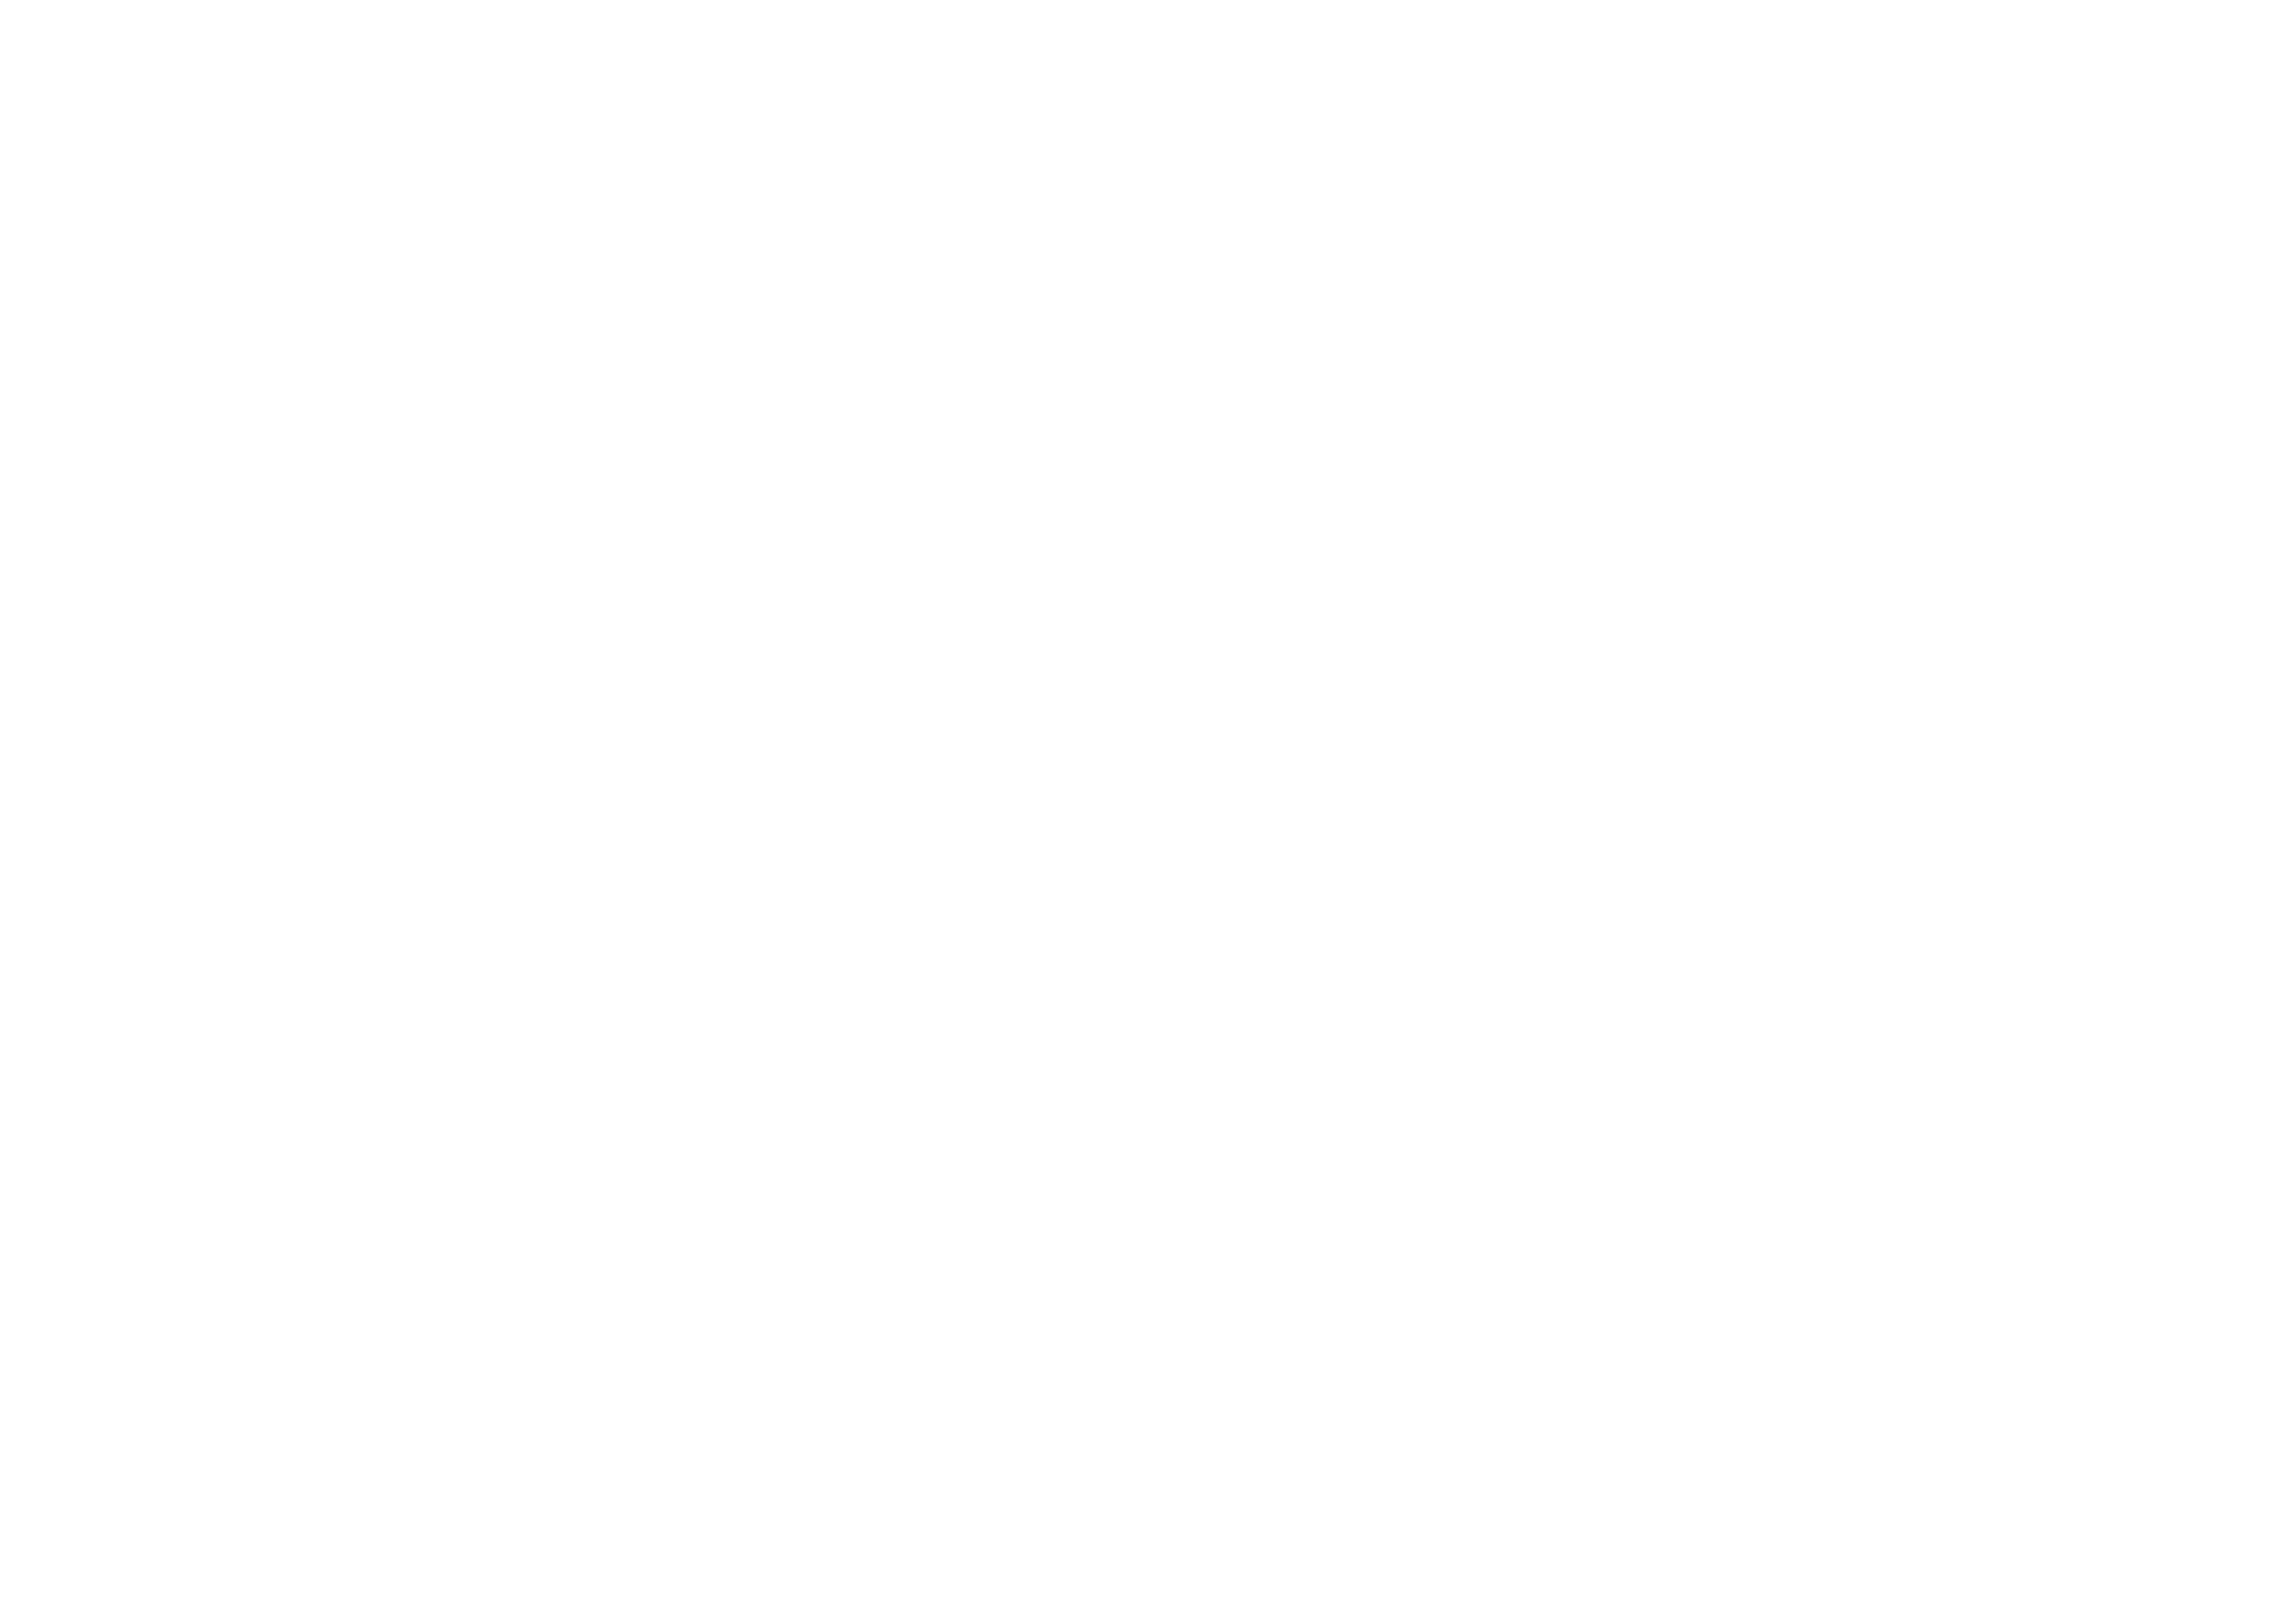 Hig invest group